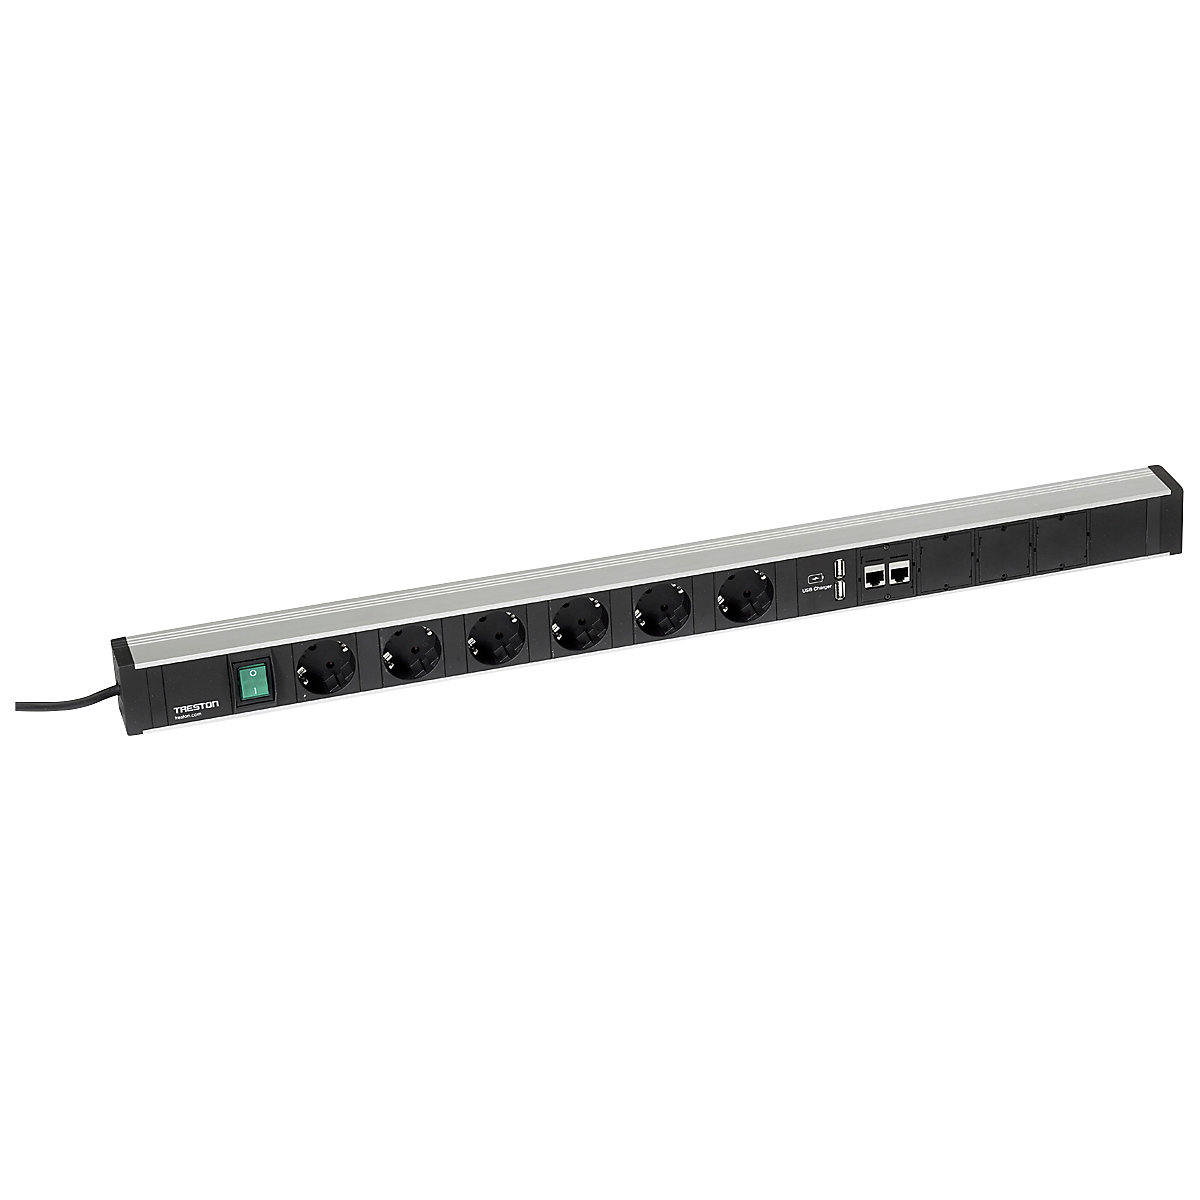 Trailing socket for work tables – Treston, 6 sockets, switch, 2 x USB, 2 x CAT6A, length 836 mm-3